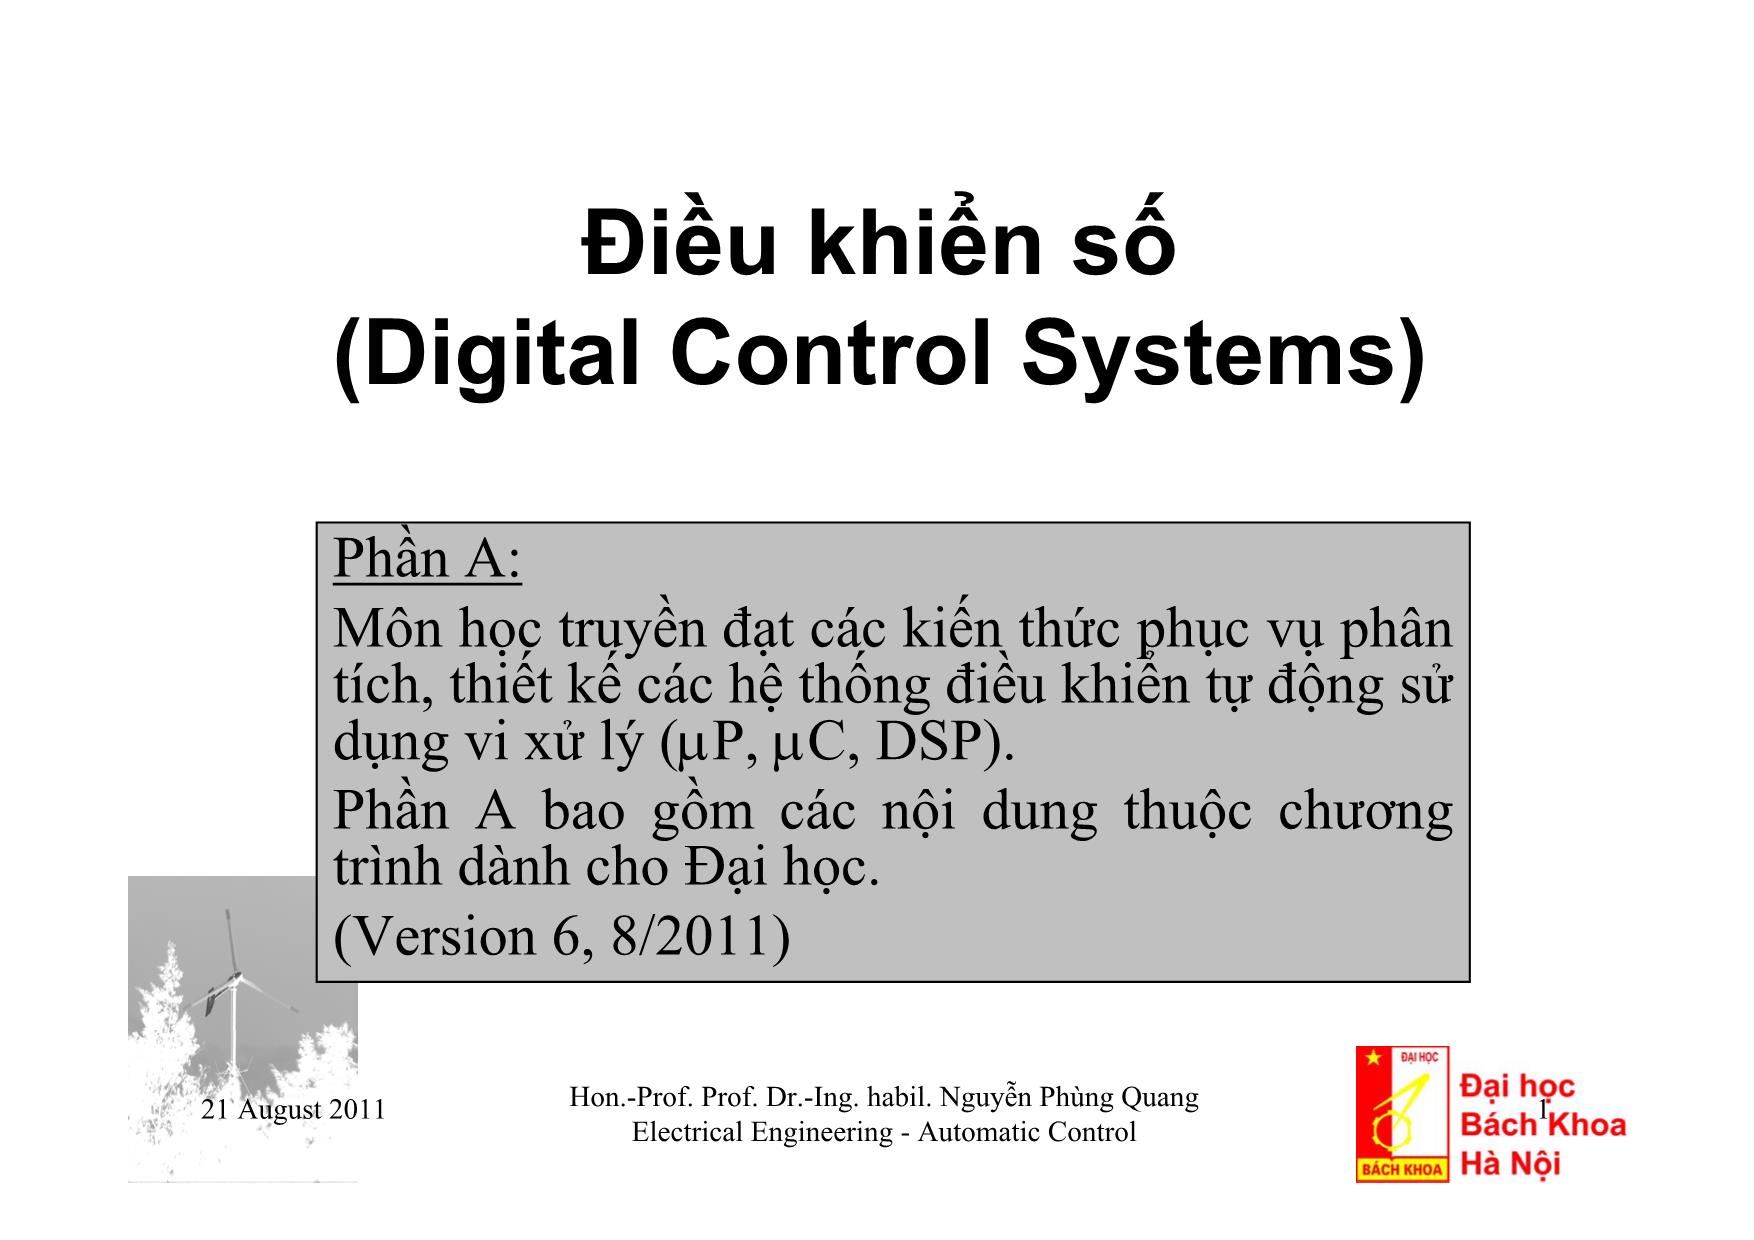 Điều khiển số (Digital Control Systems) trang 1